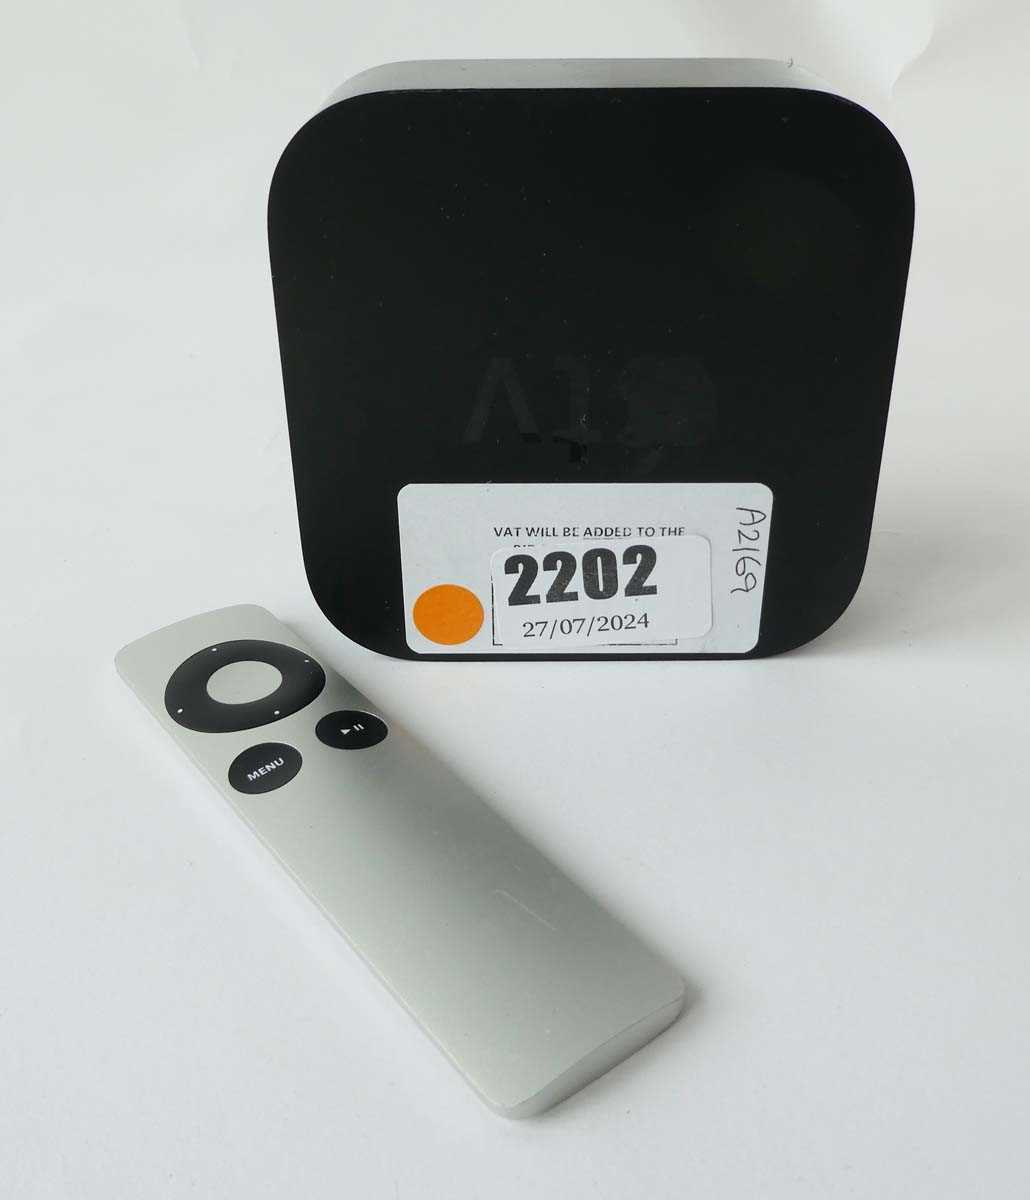 Lot 2202 - Apple TV 4K 32GB